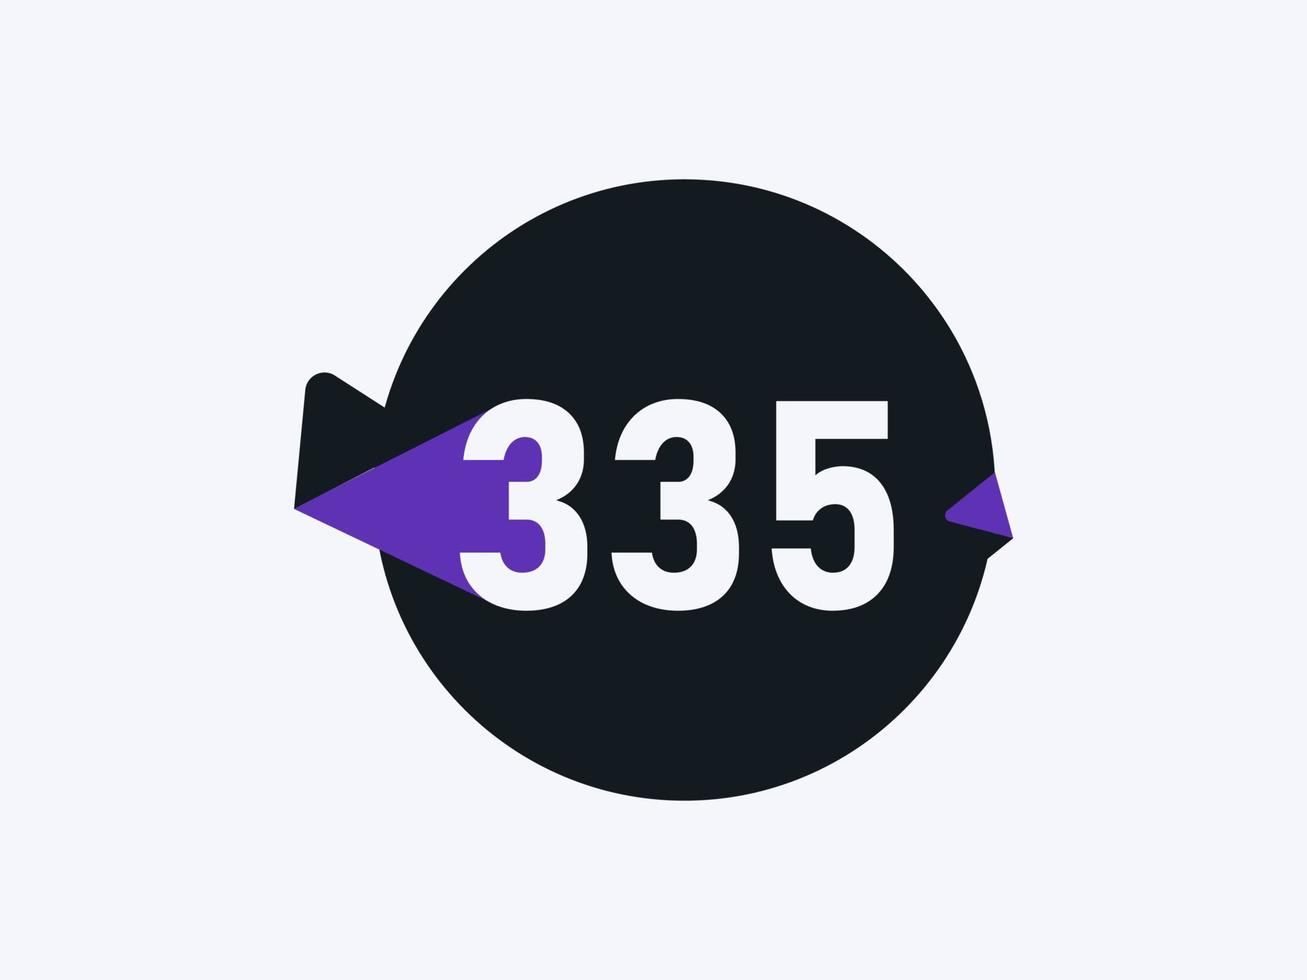 335 Number logo icon design vector image. Number logo icon design vector image